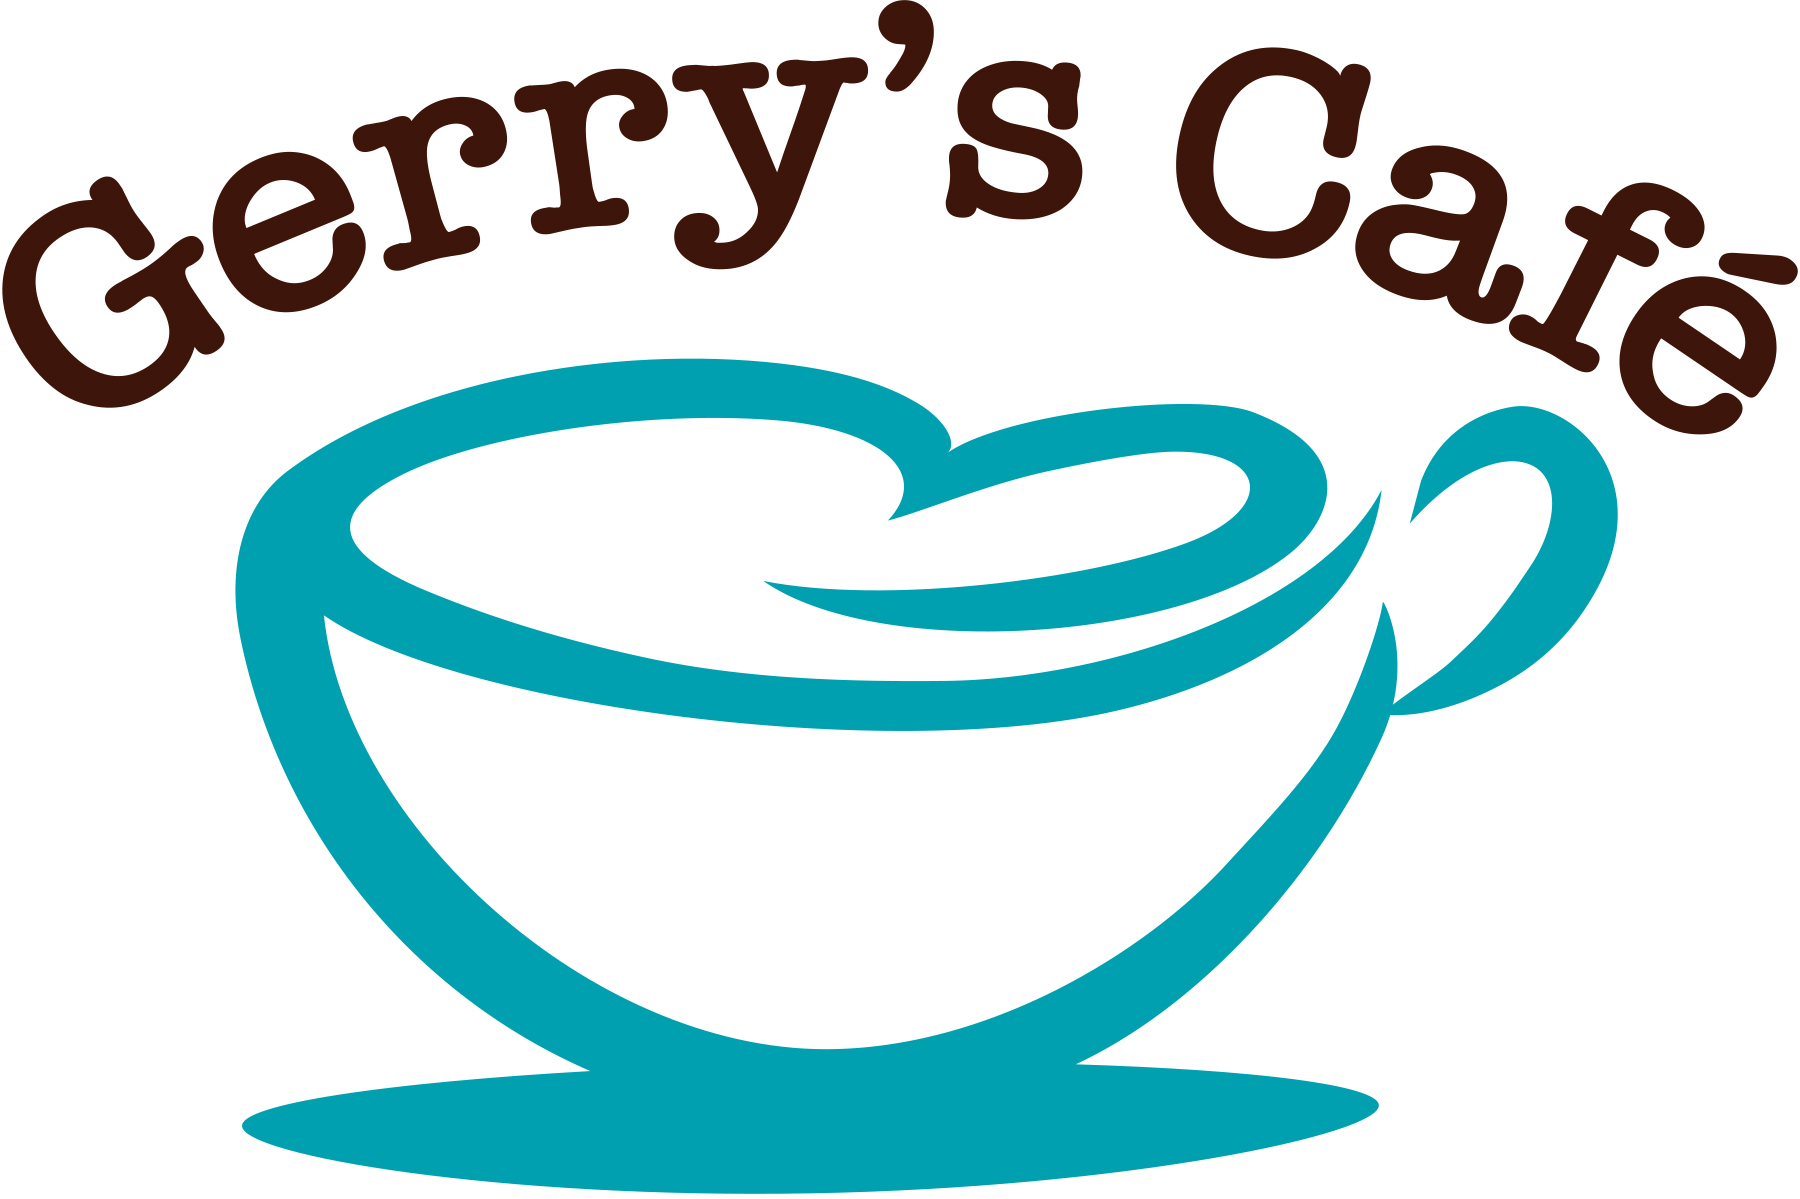 Gerrys_Cafe_Logo_Final.jpg